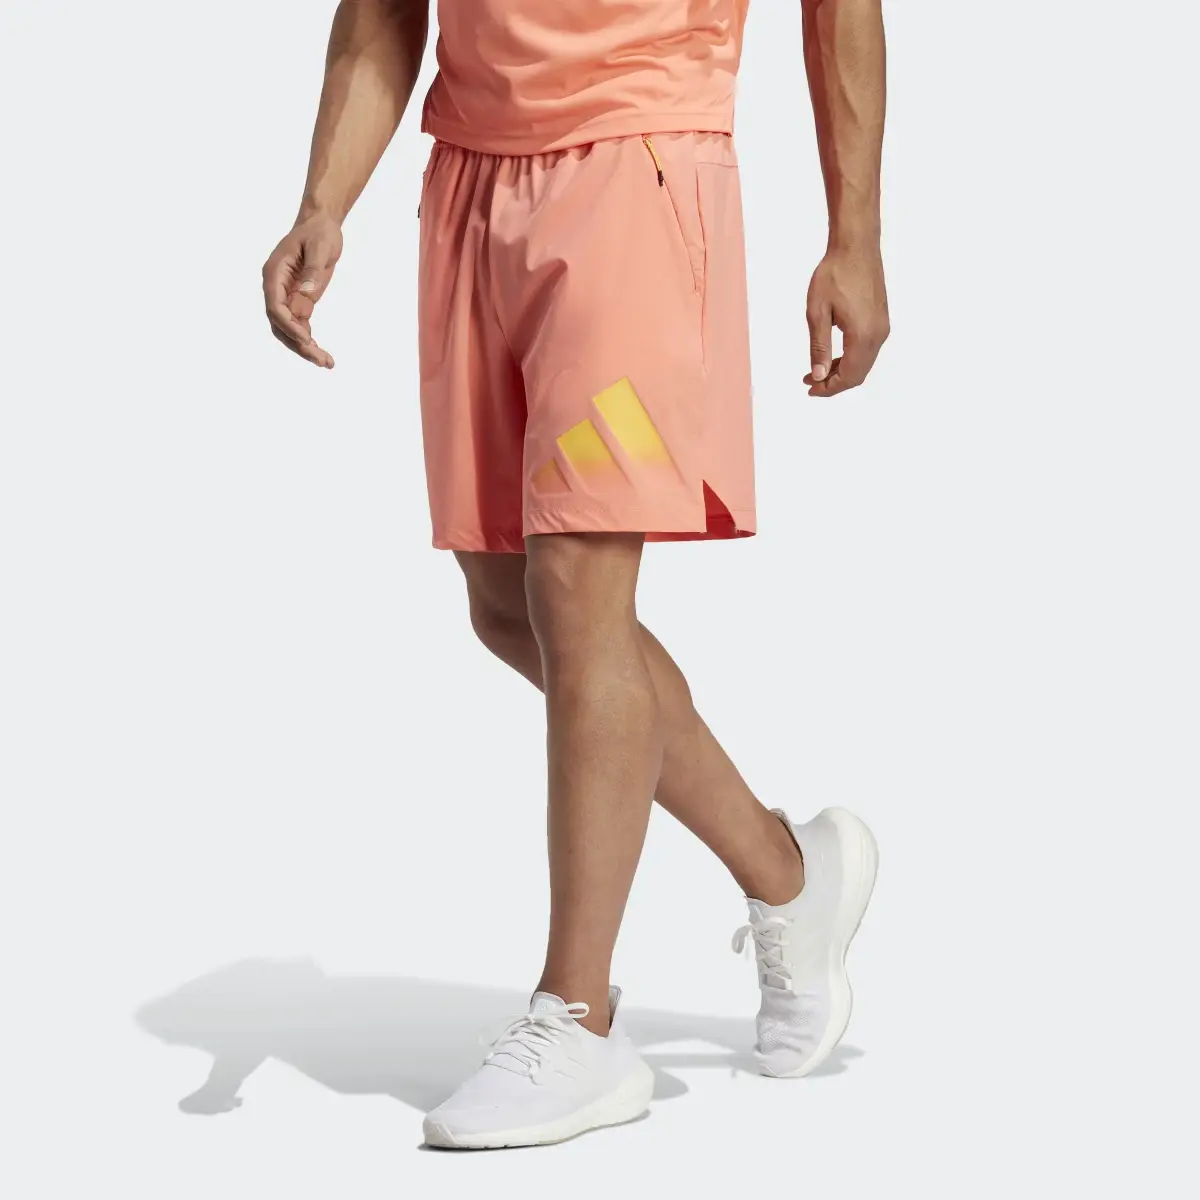 Adidas Train Icons 3-Stripes Training Shorts. 1